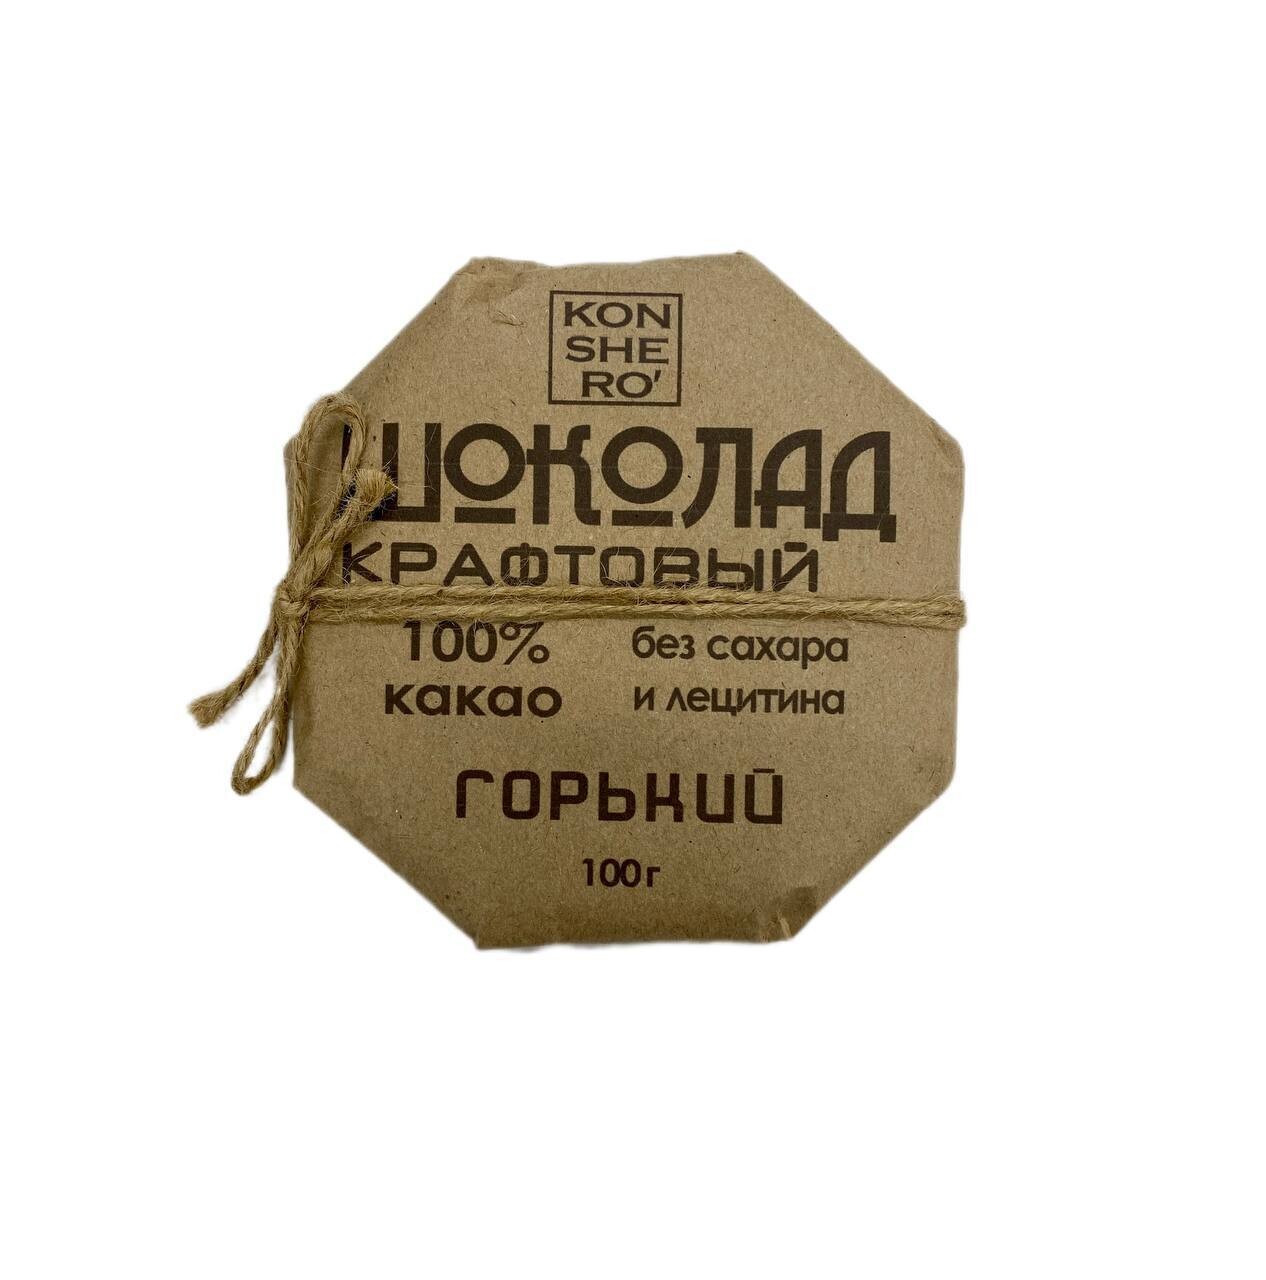 Крафтовый шоколад горький (100% какао), KONSHERO, 100 г